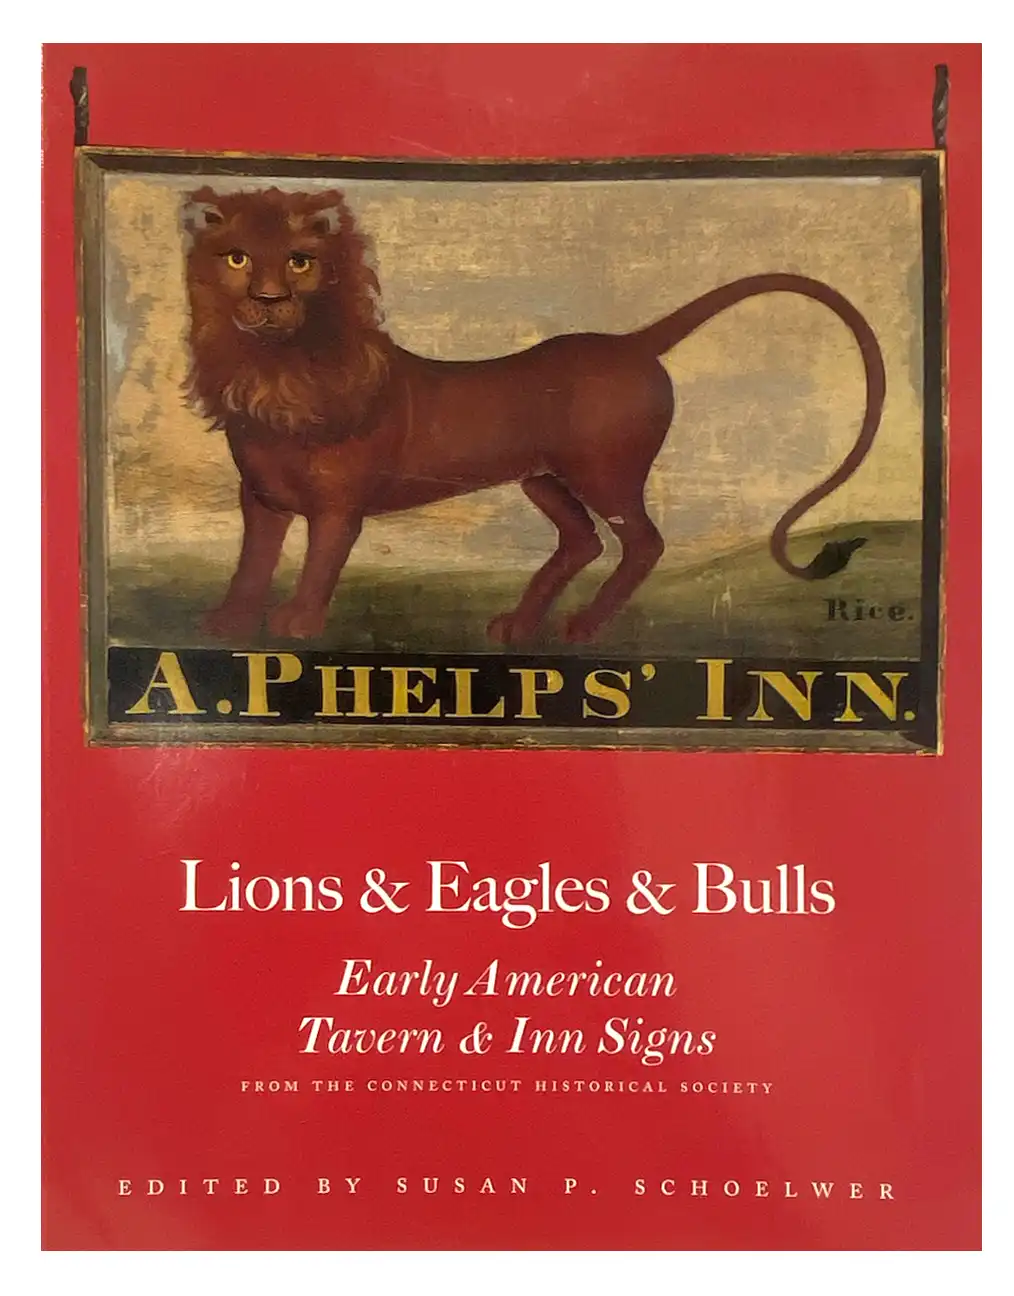 LIONS & EAGLES & BULLS